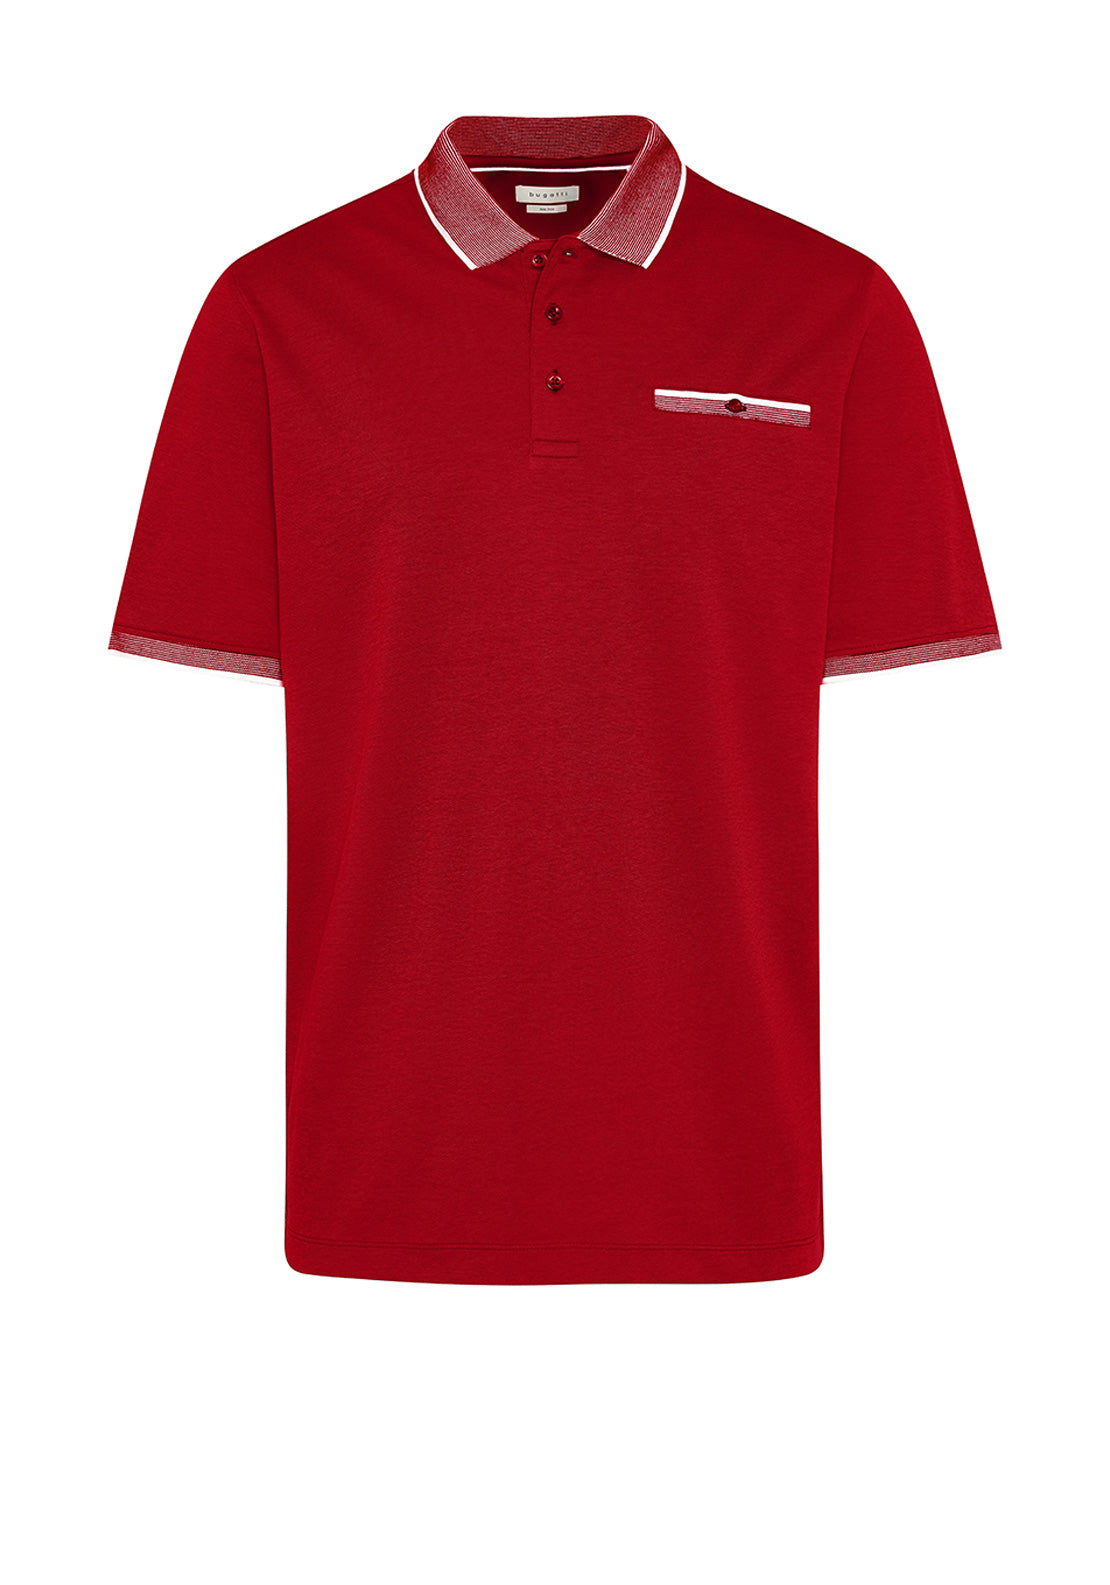 Contrast Trim McElhinneys - Shirt, Polo Red Bugatti